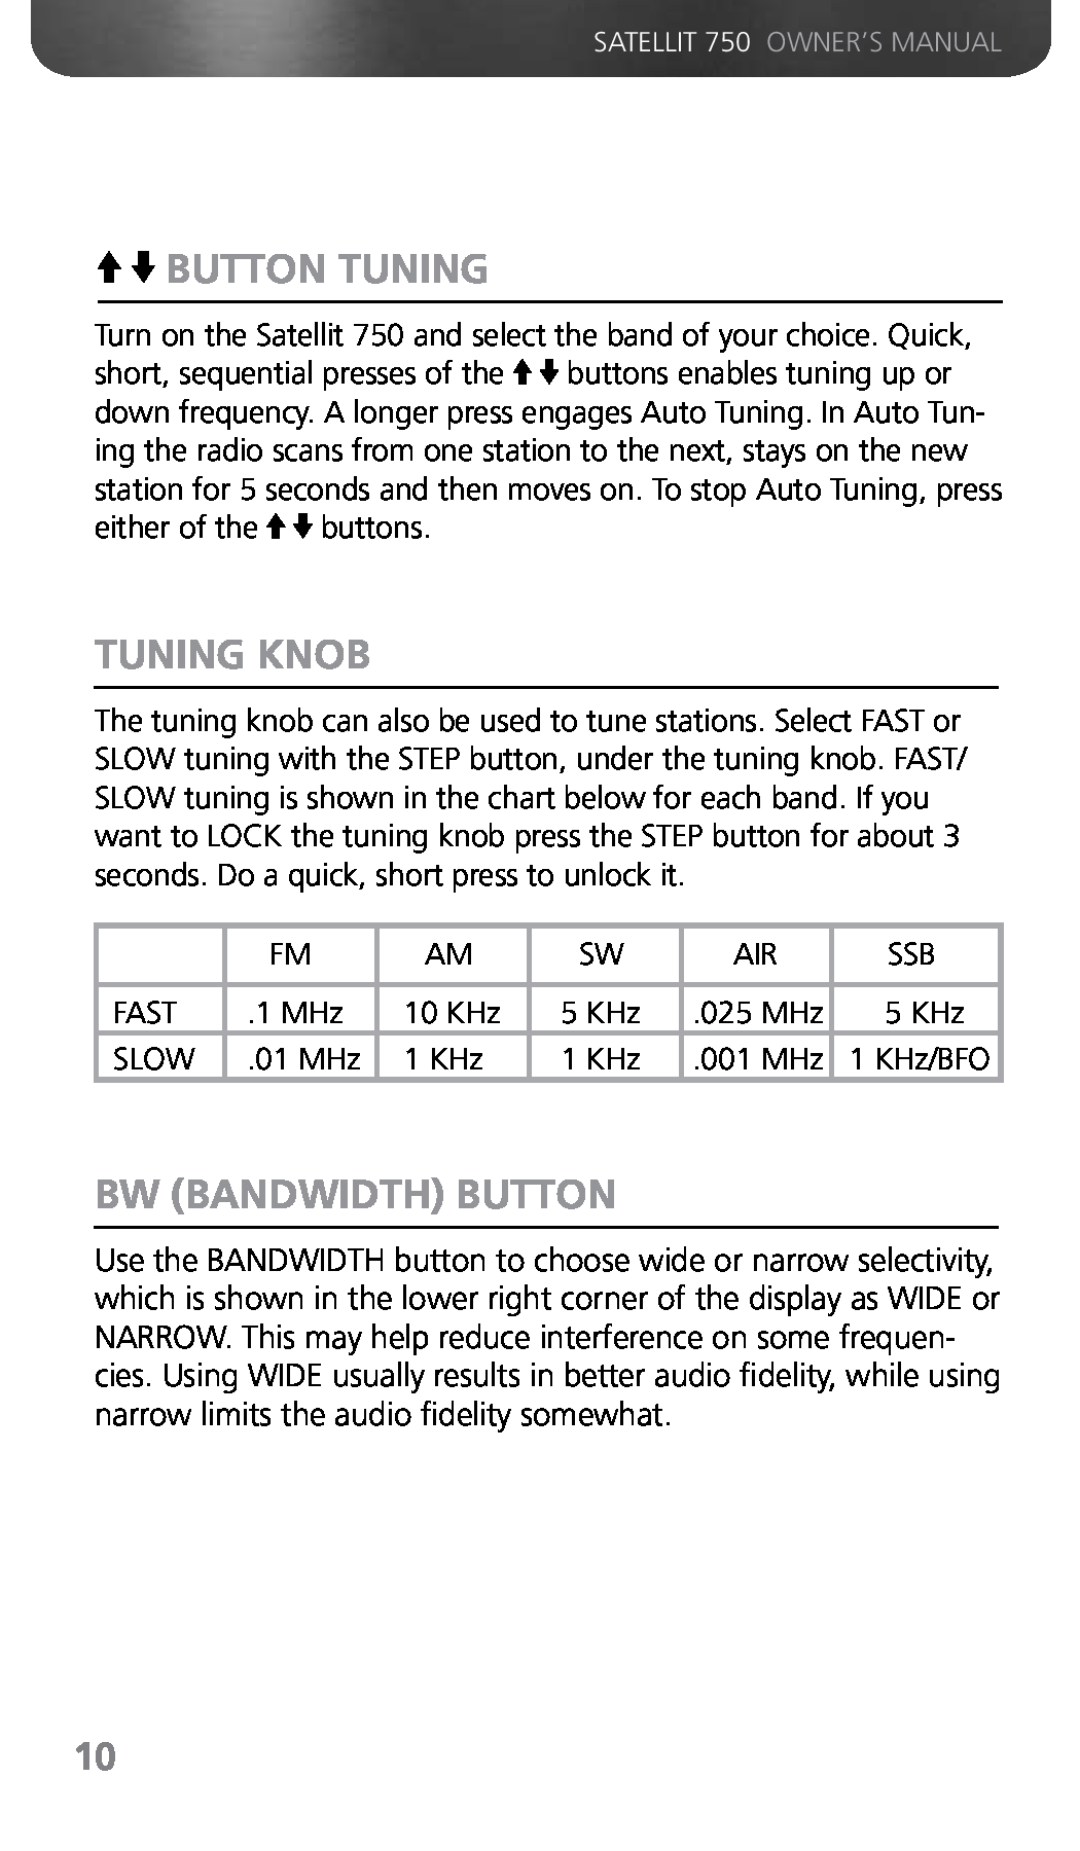 Grundig 750 owner manual Button Tuning, Tuning Knob, Bw Bandwidth Button 